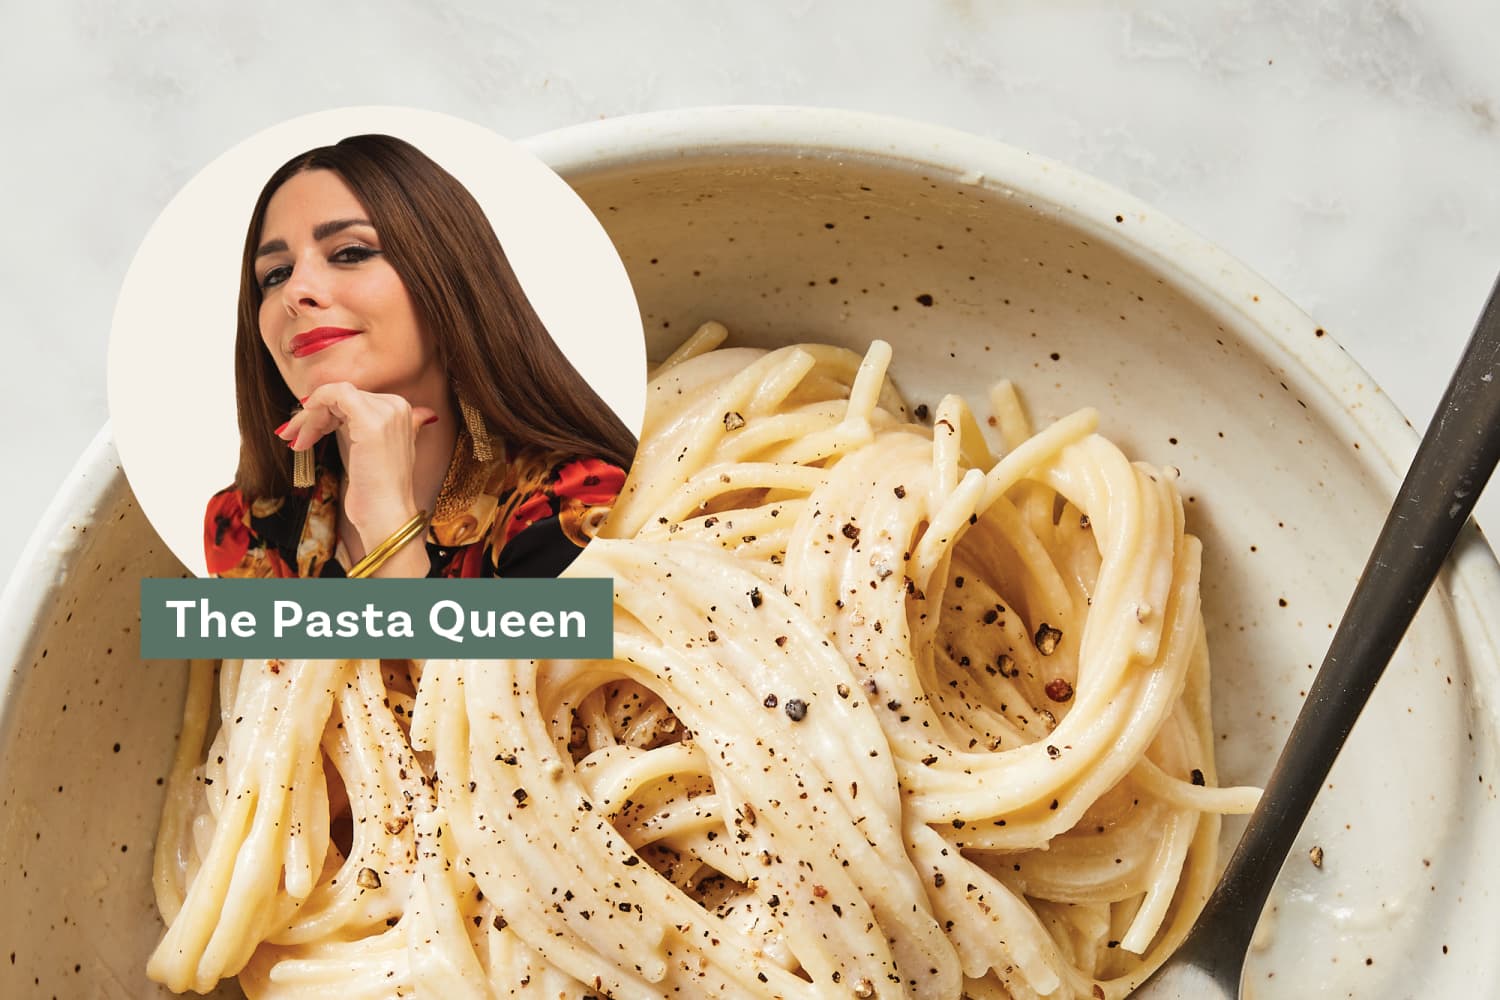 The Pasta Queen’s Cacio e Pepe Is for Pasta Purists